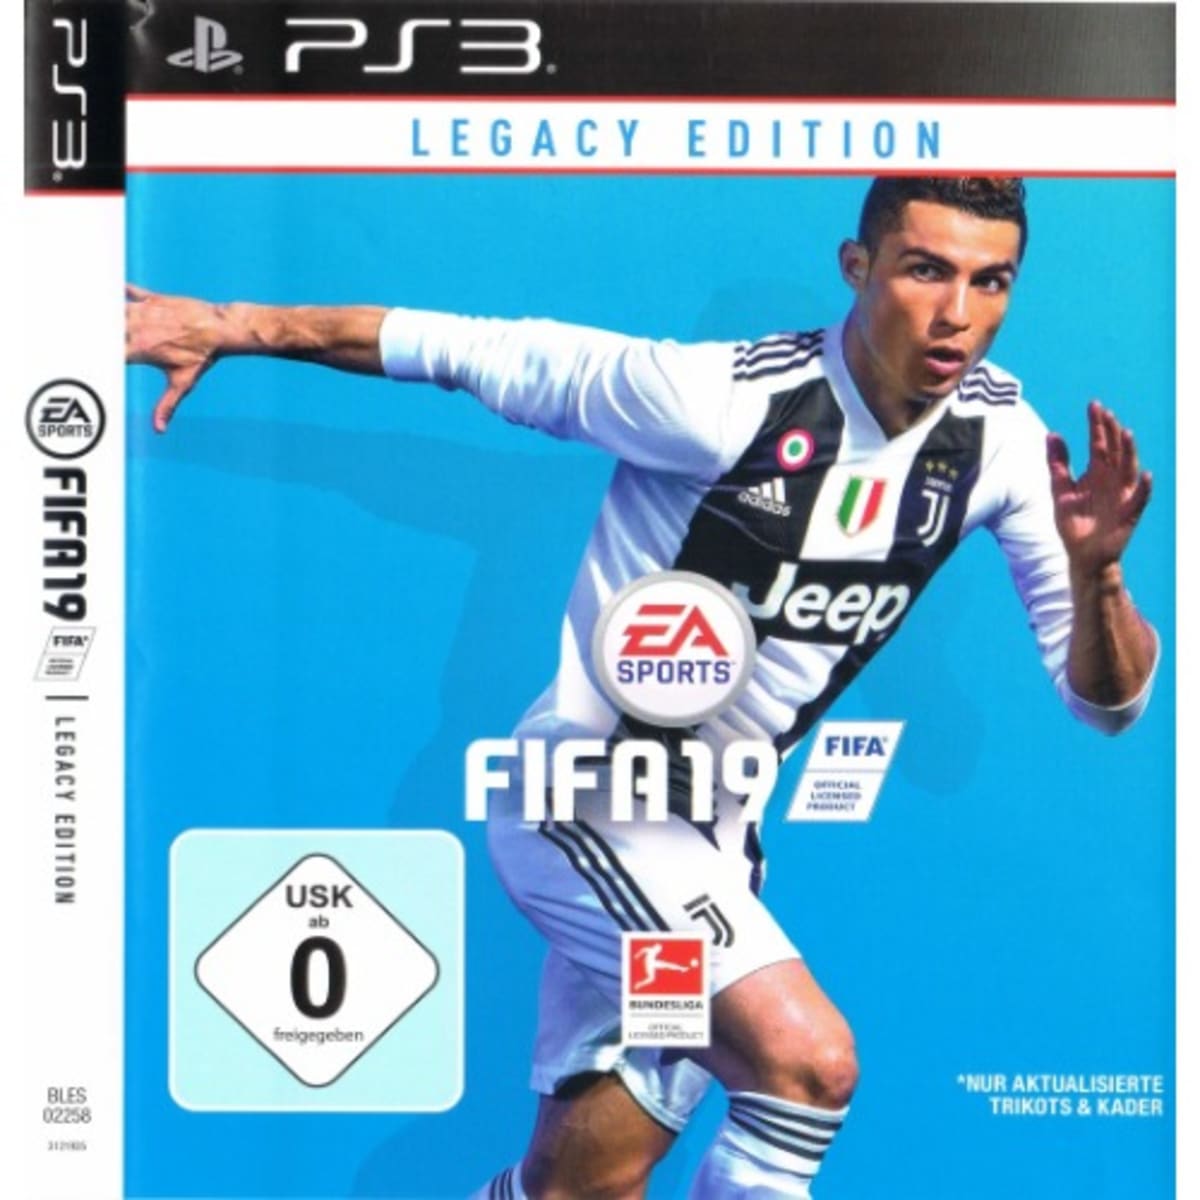 FIFA 19 PS3 